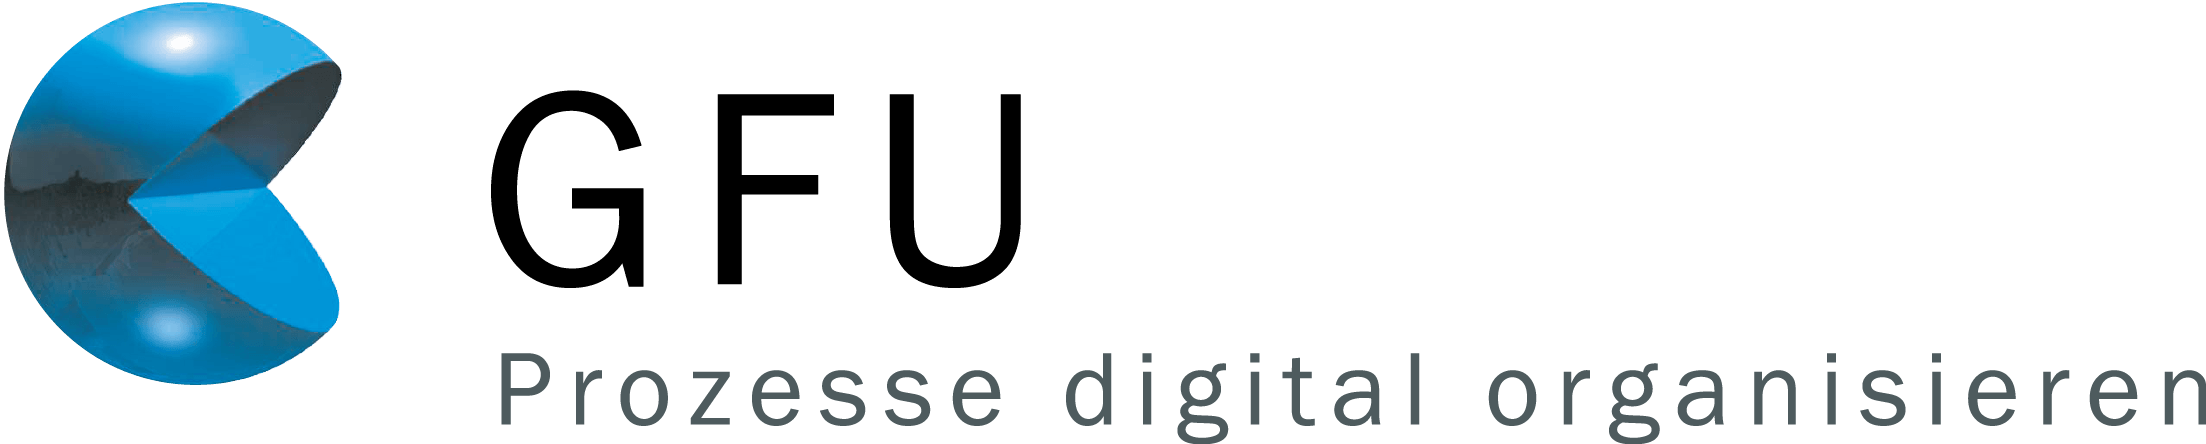 Gfu Logo - GFU GmbH - Prozesse digital organisieren